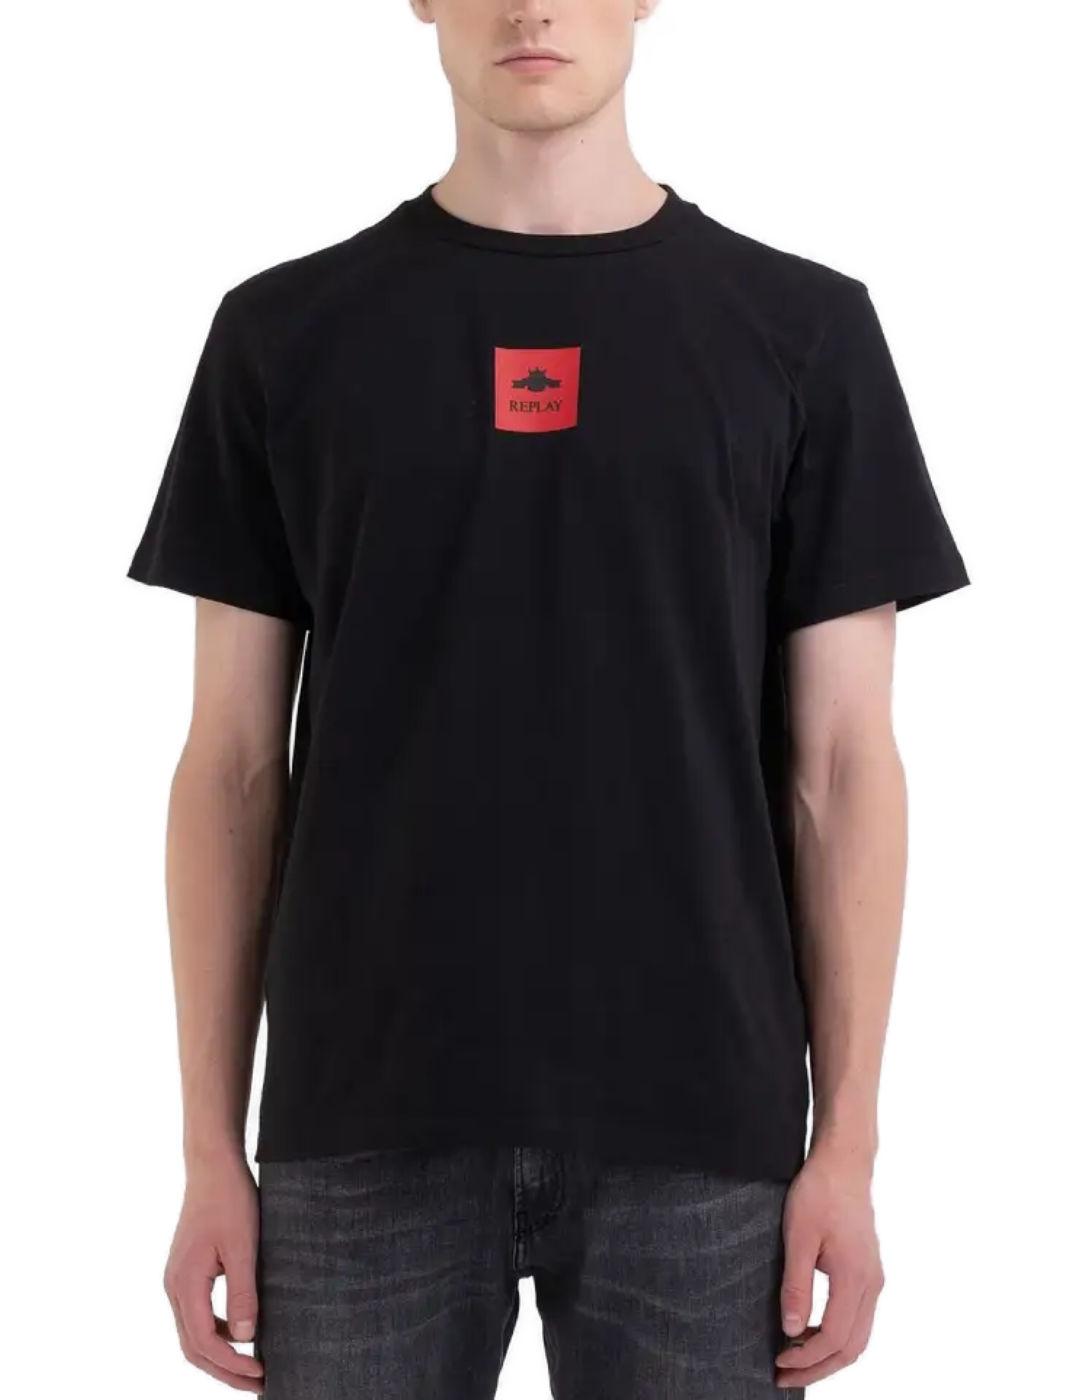 Camiseta Replay negra logo rojo manga corta de hombre